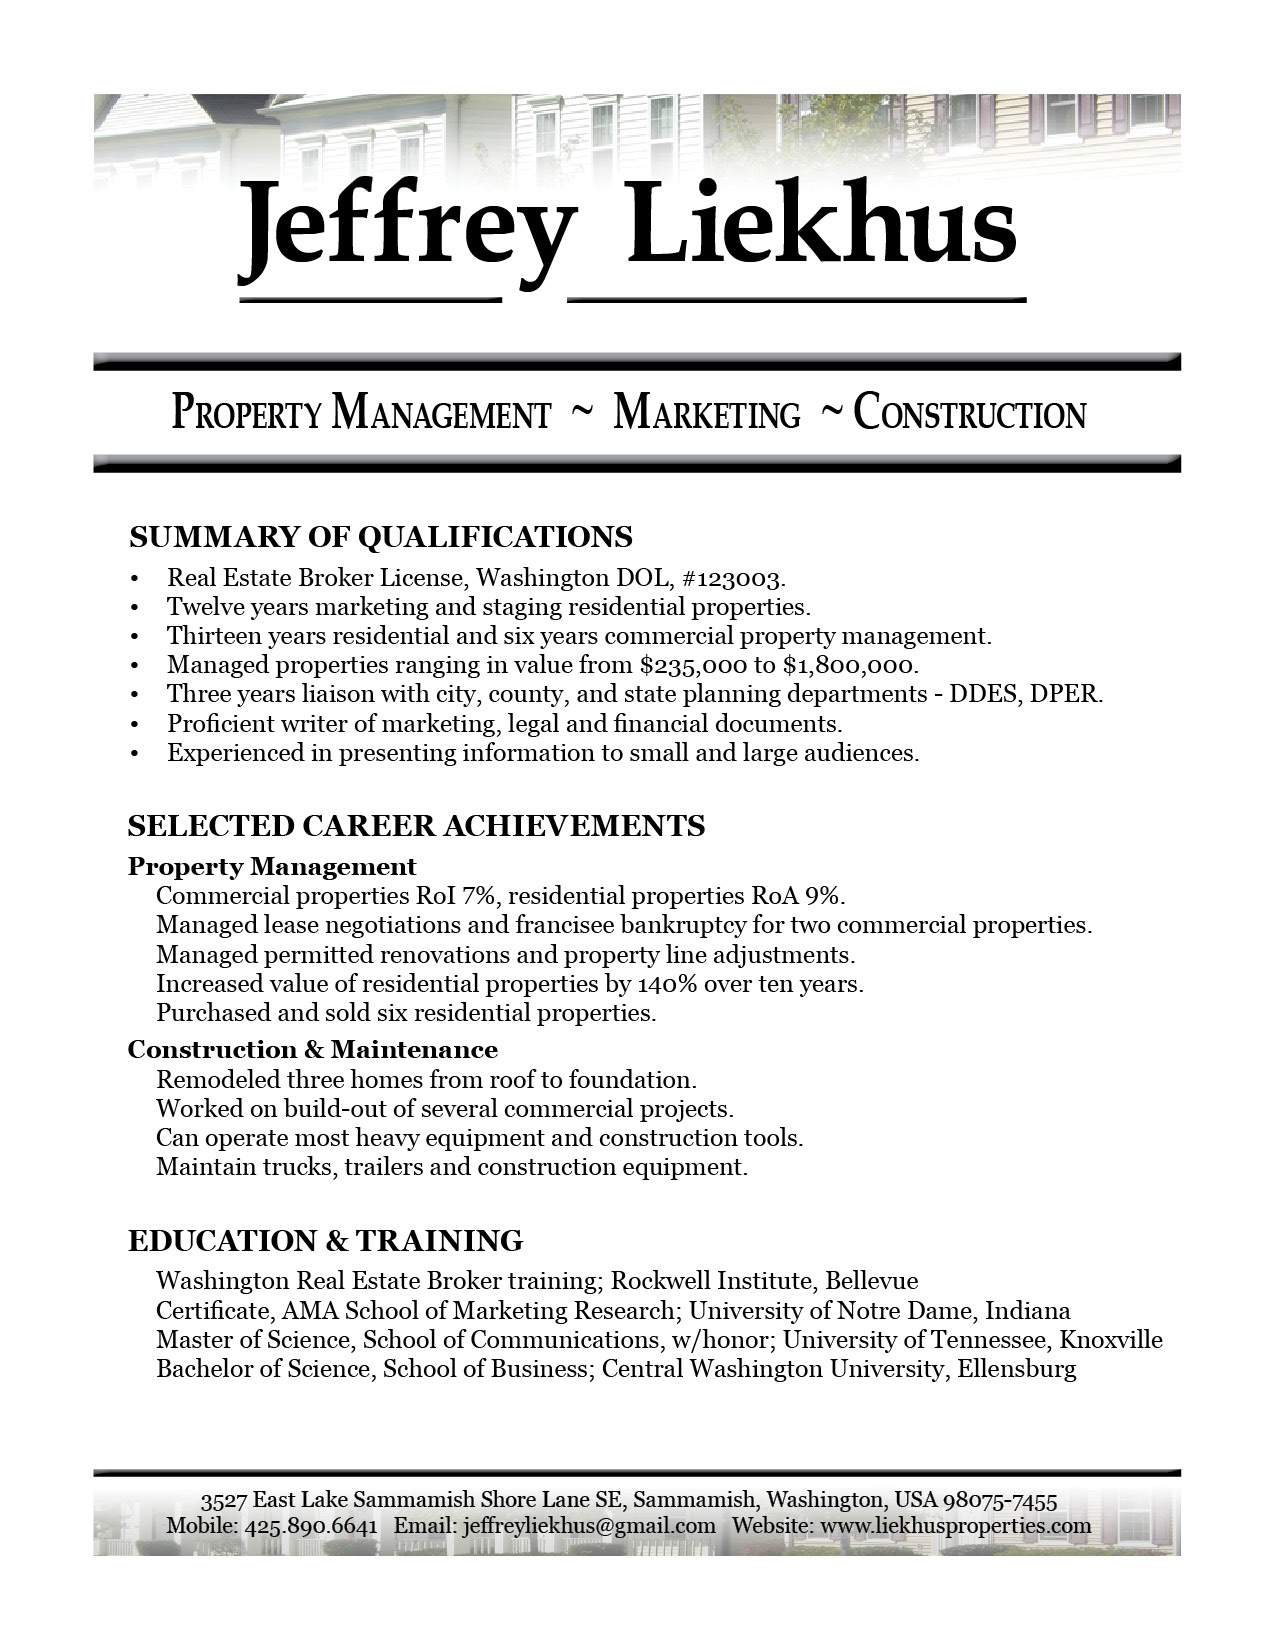 Jeffrey Liekhus Resusme' page 1